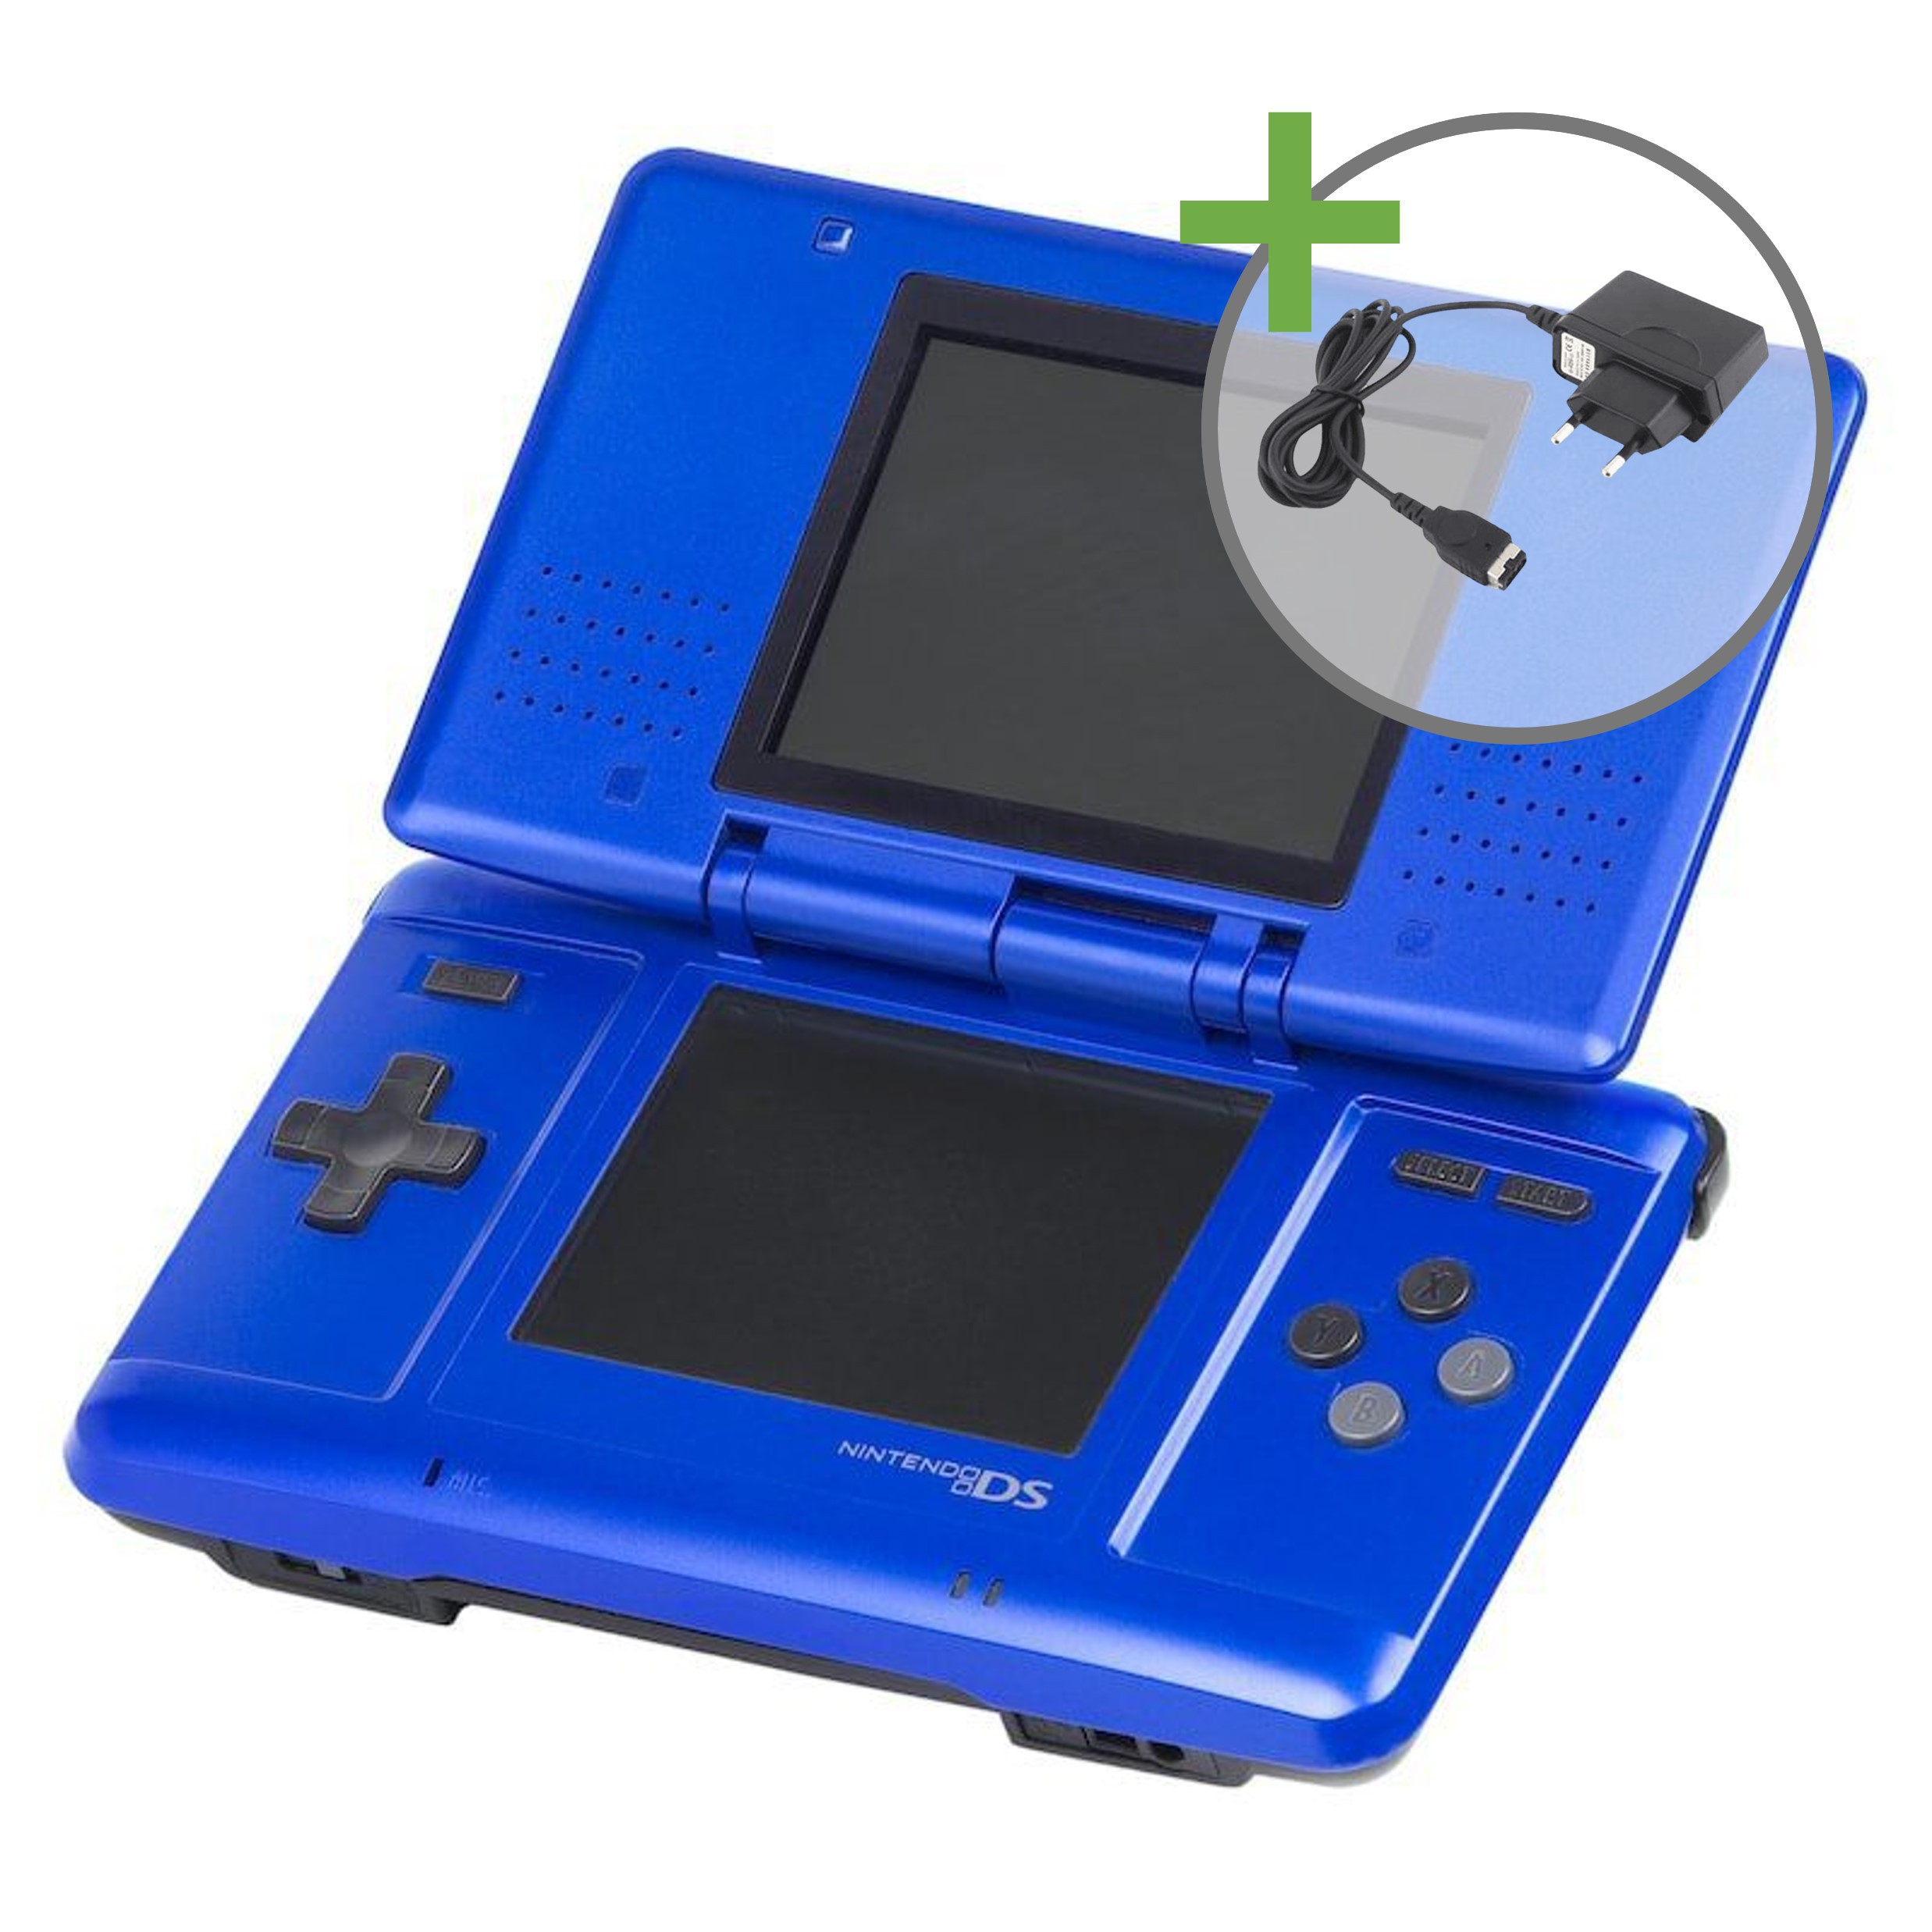 Nintendo DS Original - Ice Blue - Nintendo DS Hardware - 2